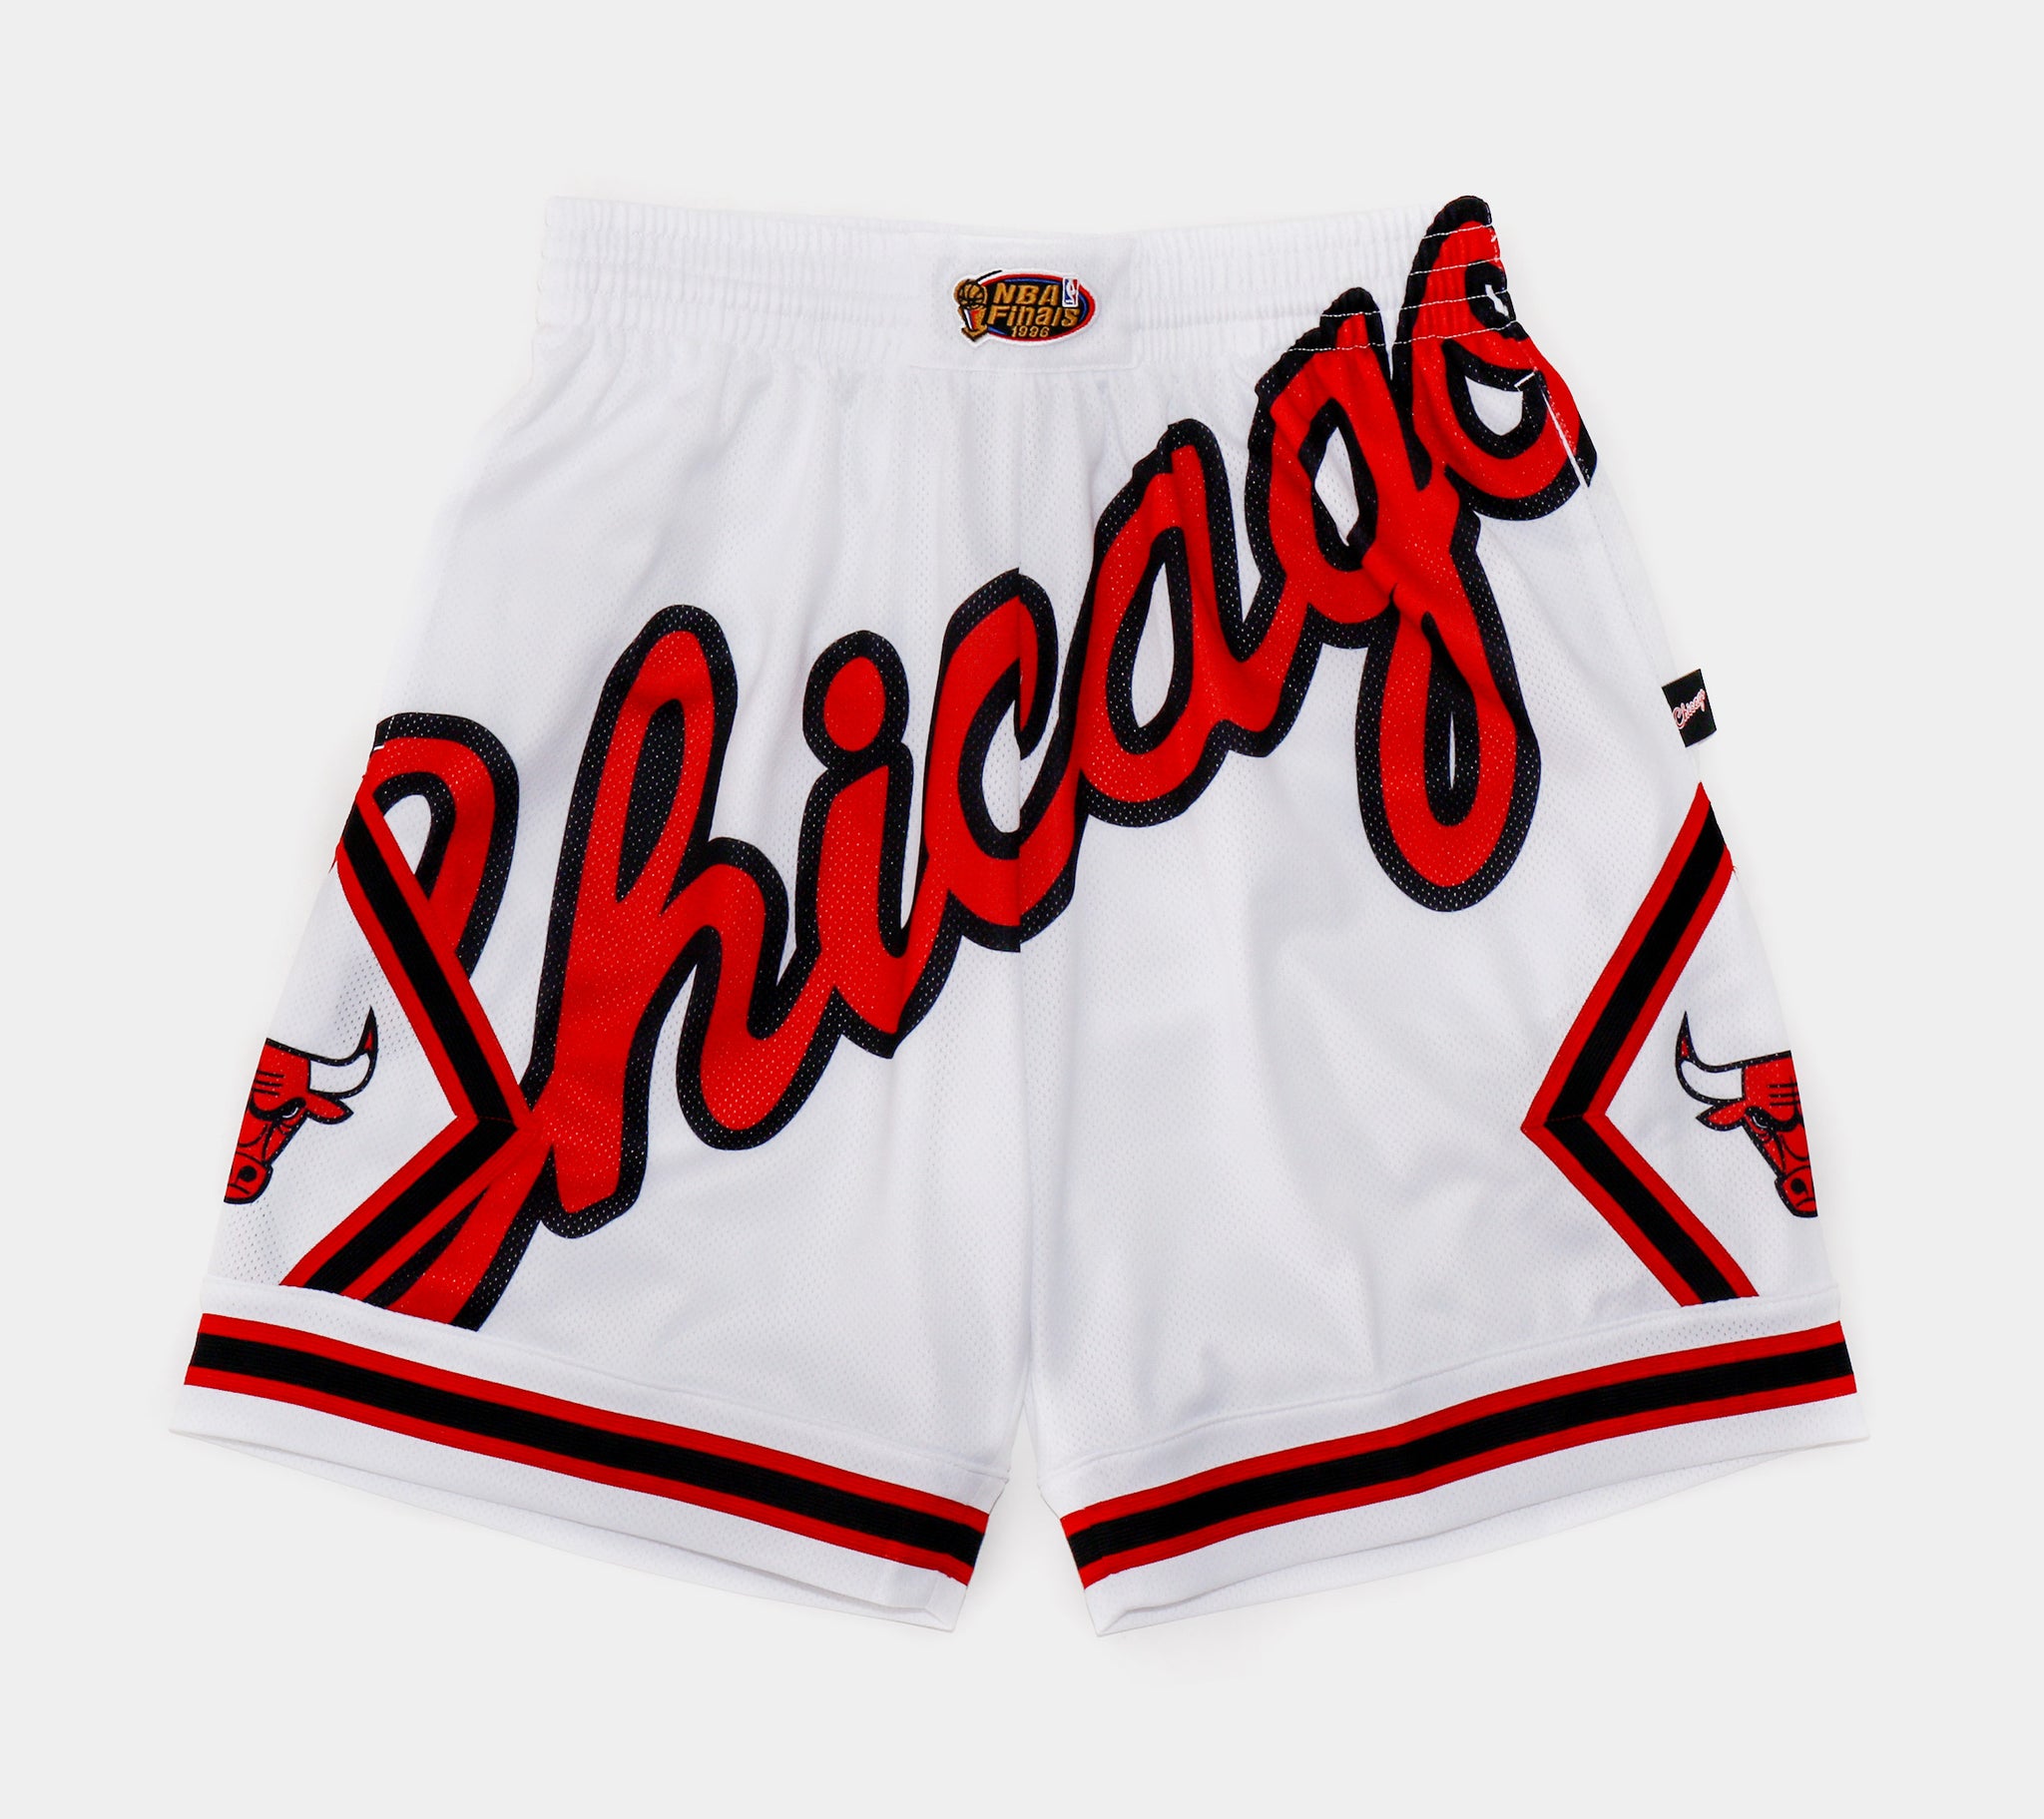 chicago bulls shorts sale